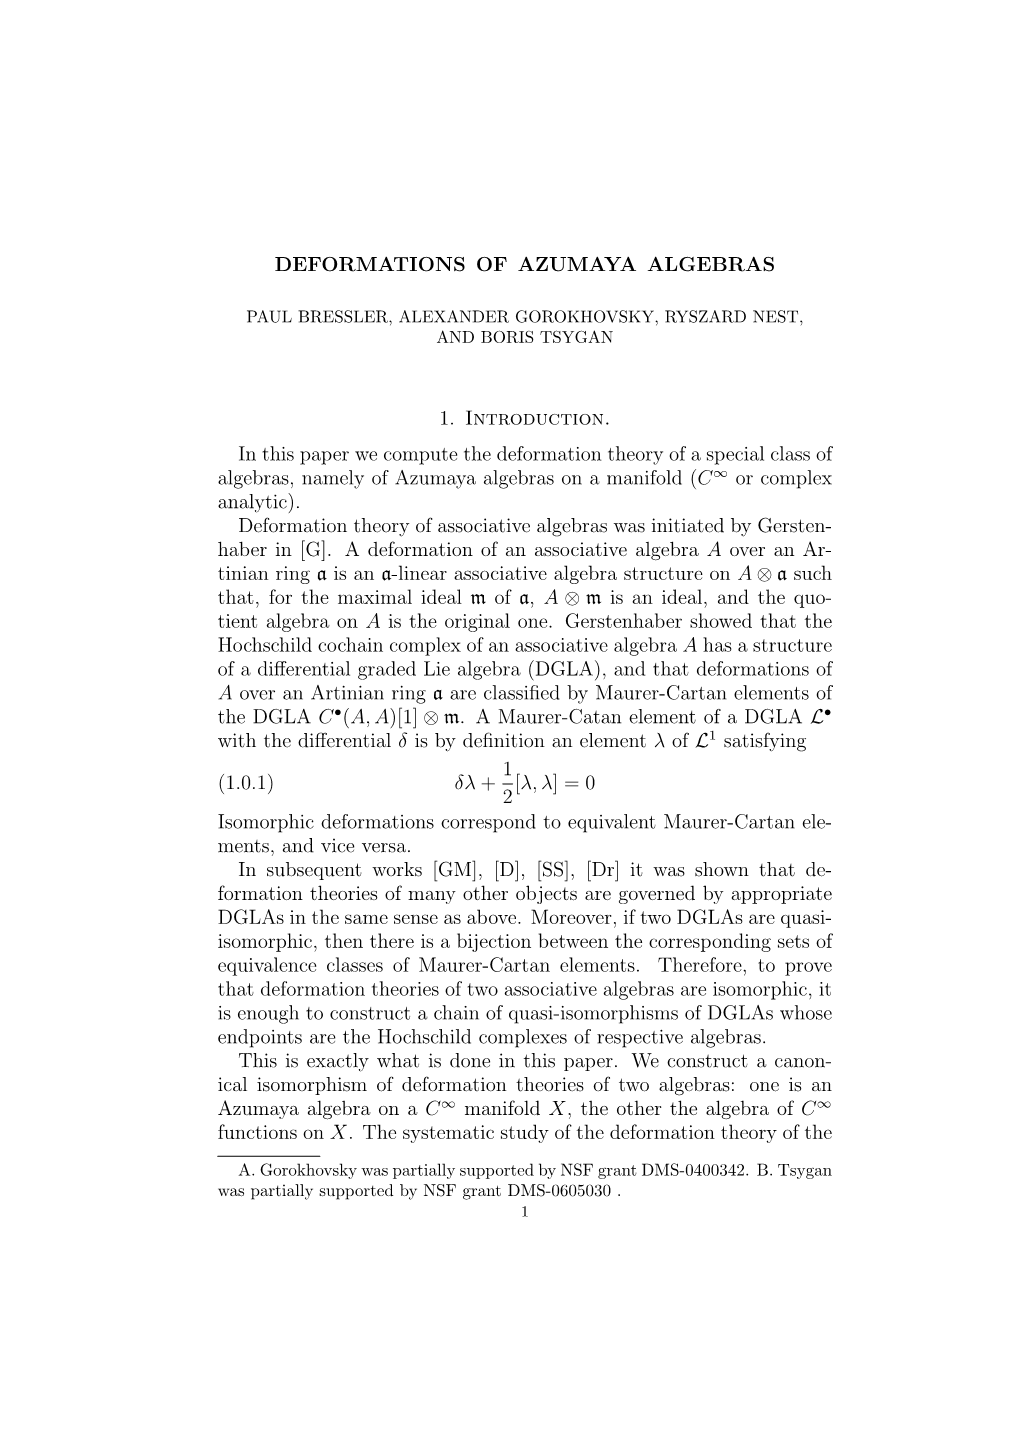 Deformations of Azumaya Algebras